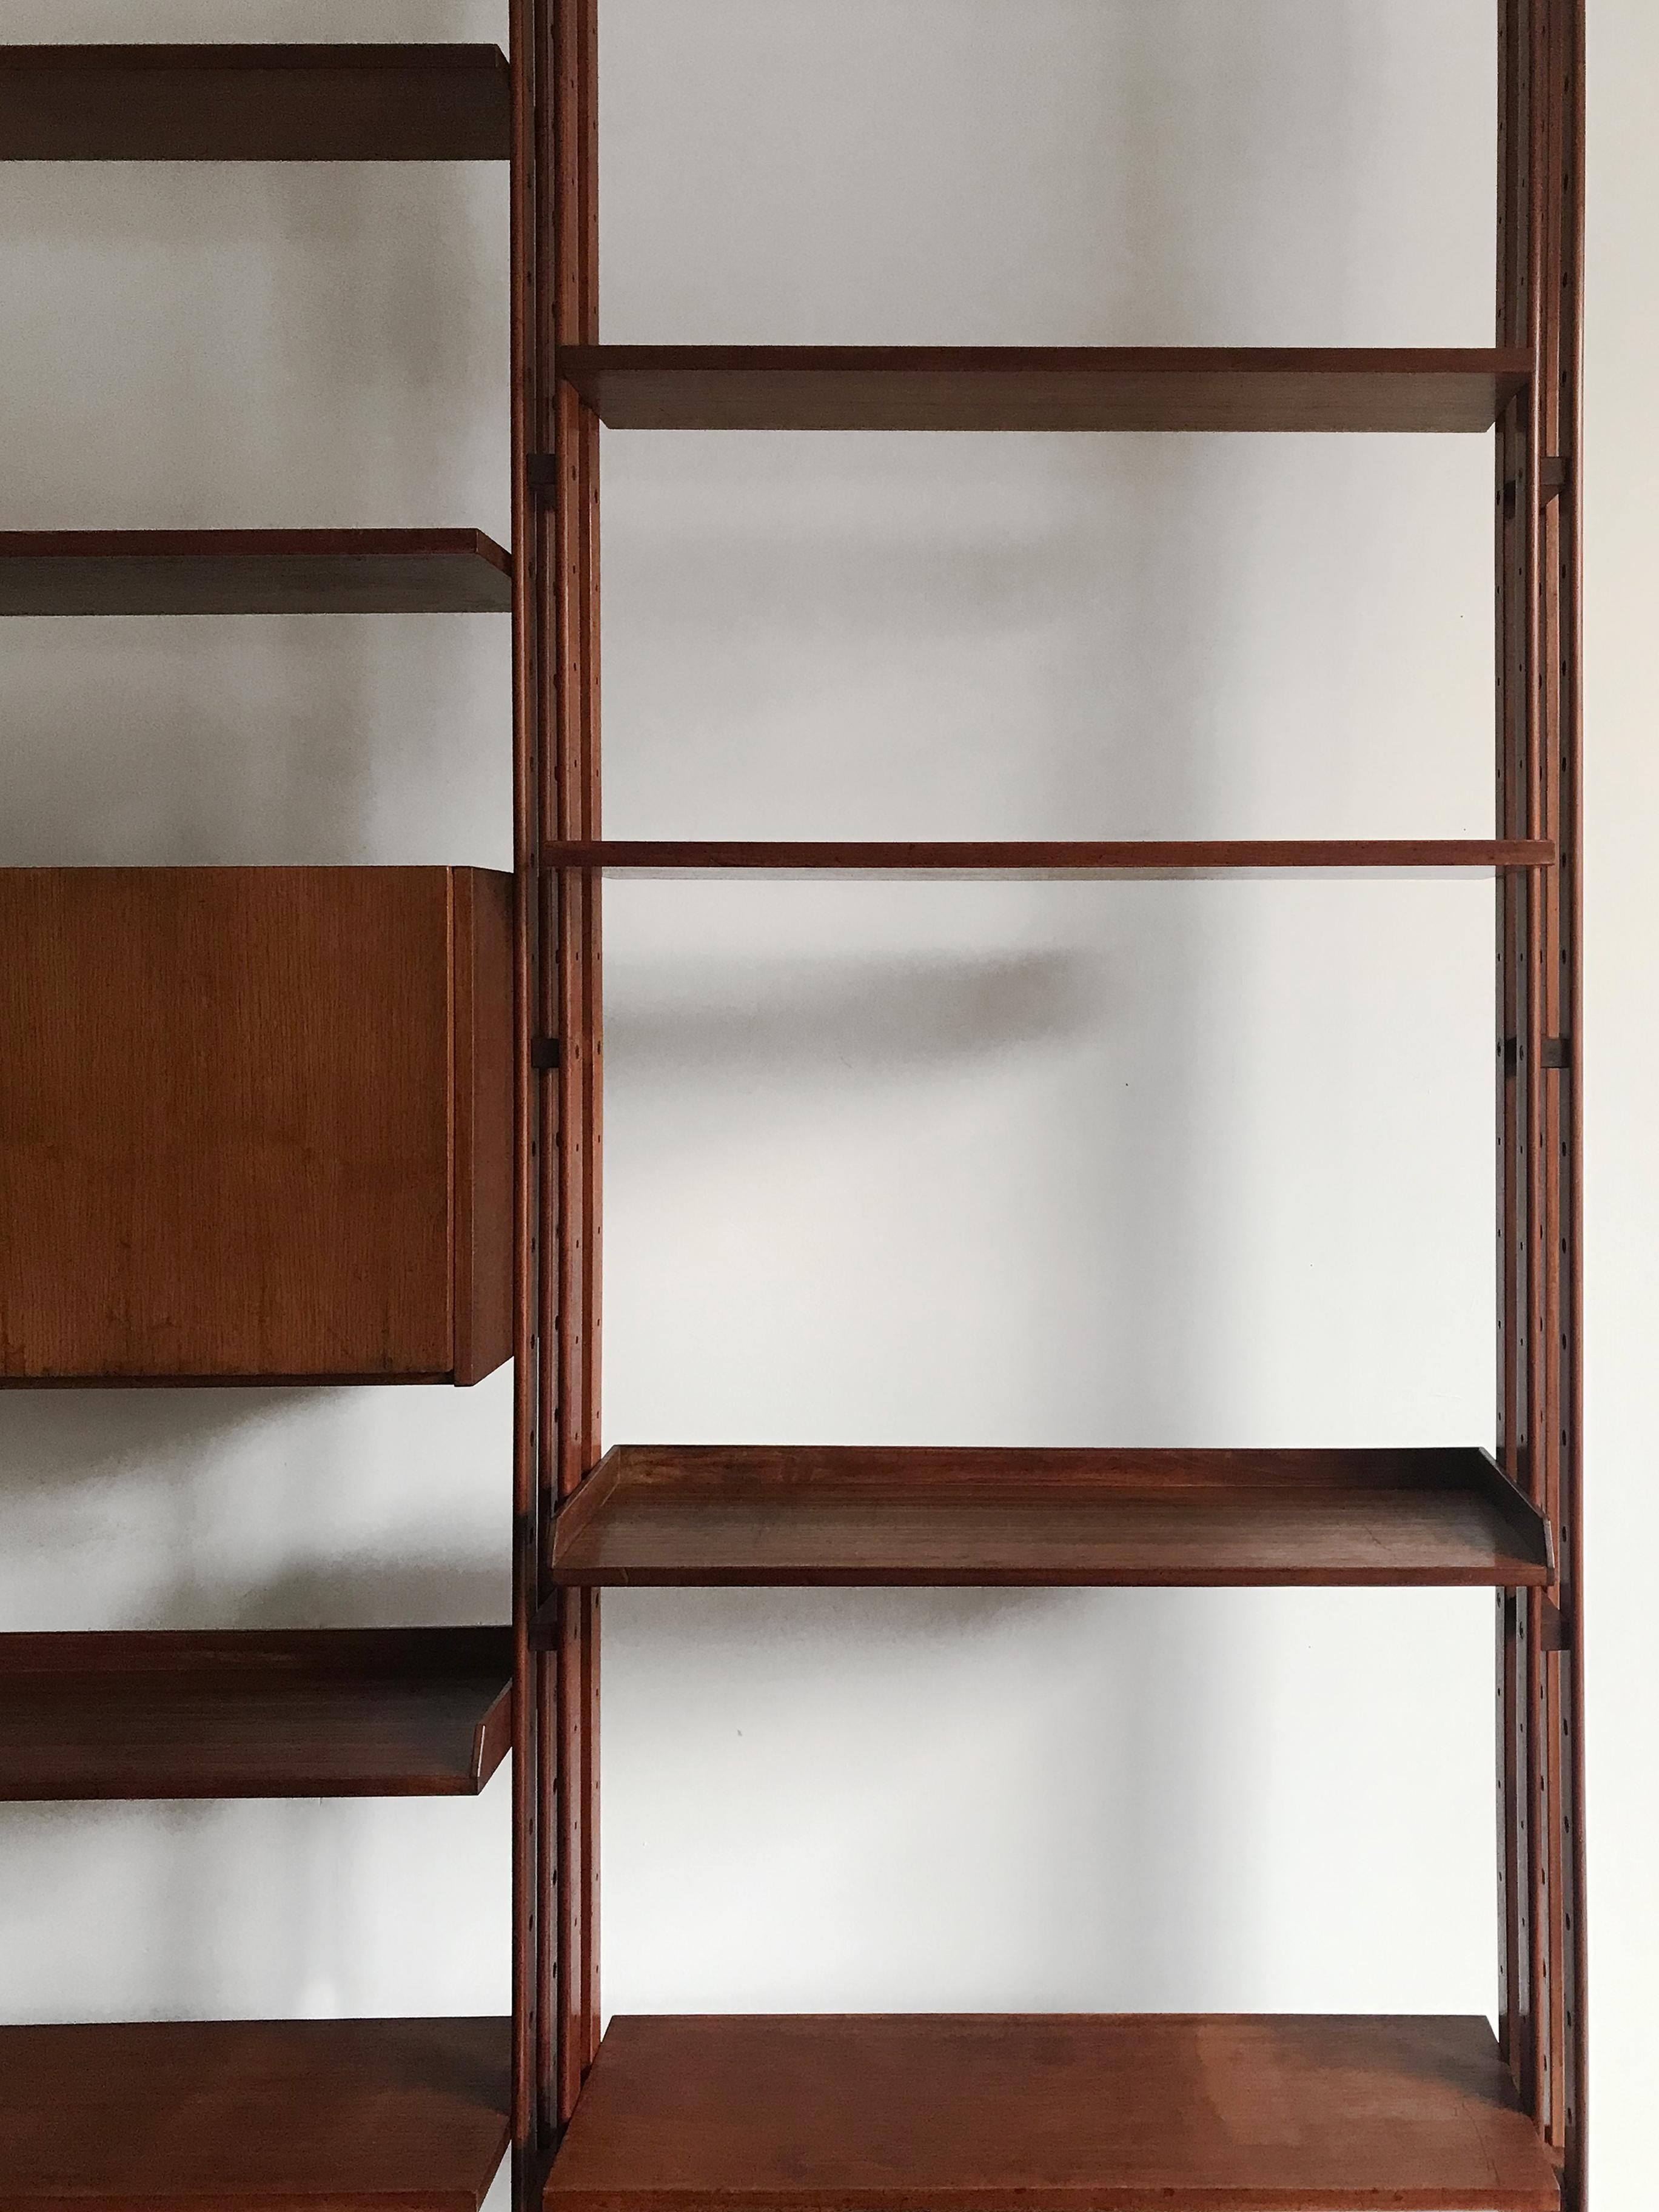 Veneer Franco Albini Italian Midcentury Wood Bookcase LB7 for Poggi, 1950s